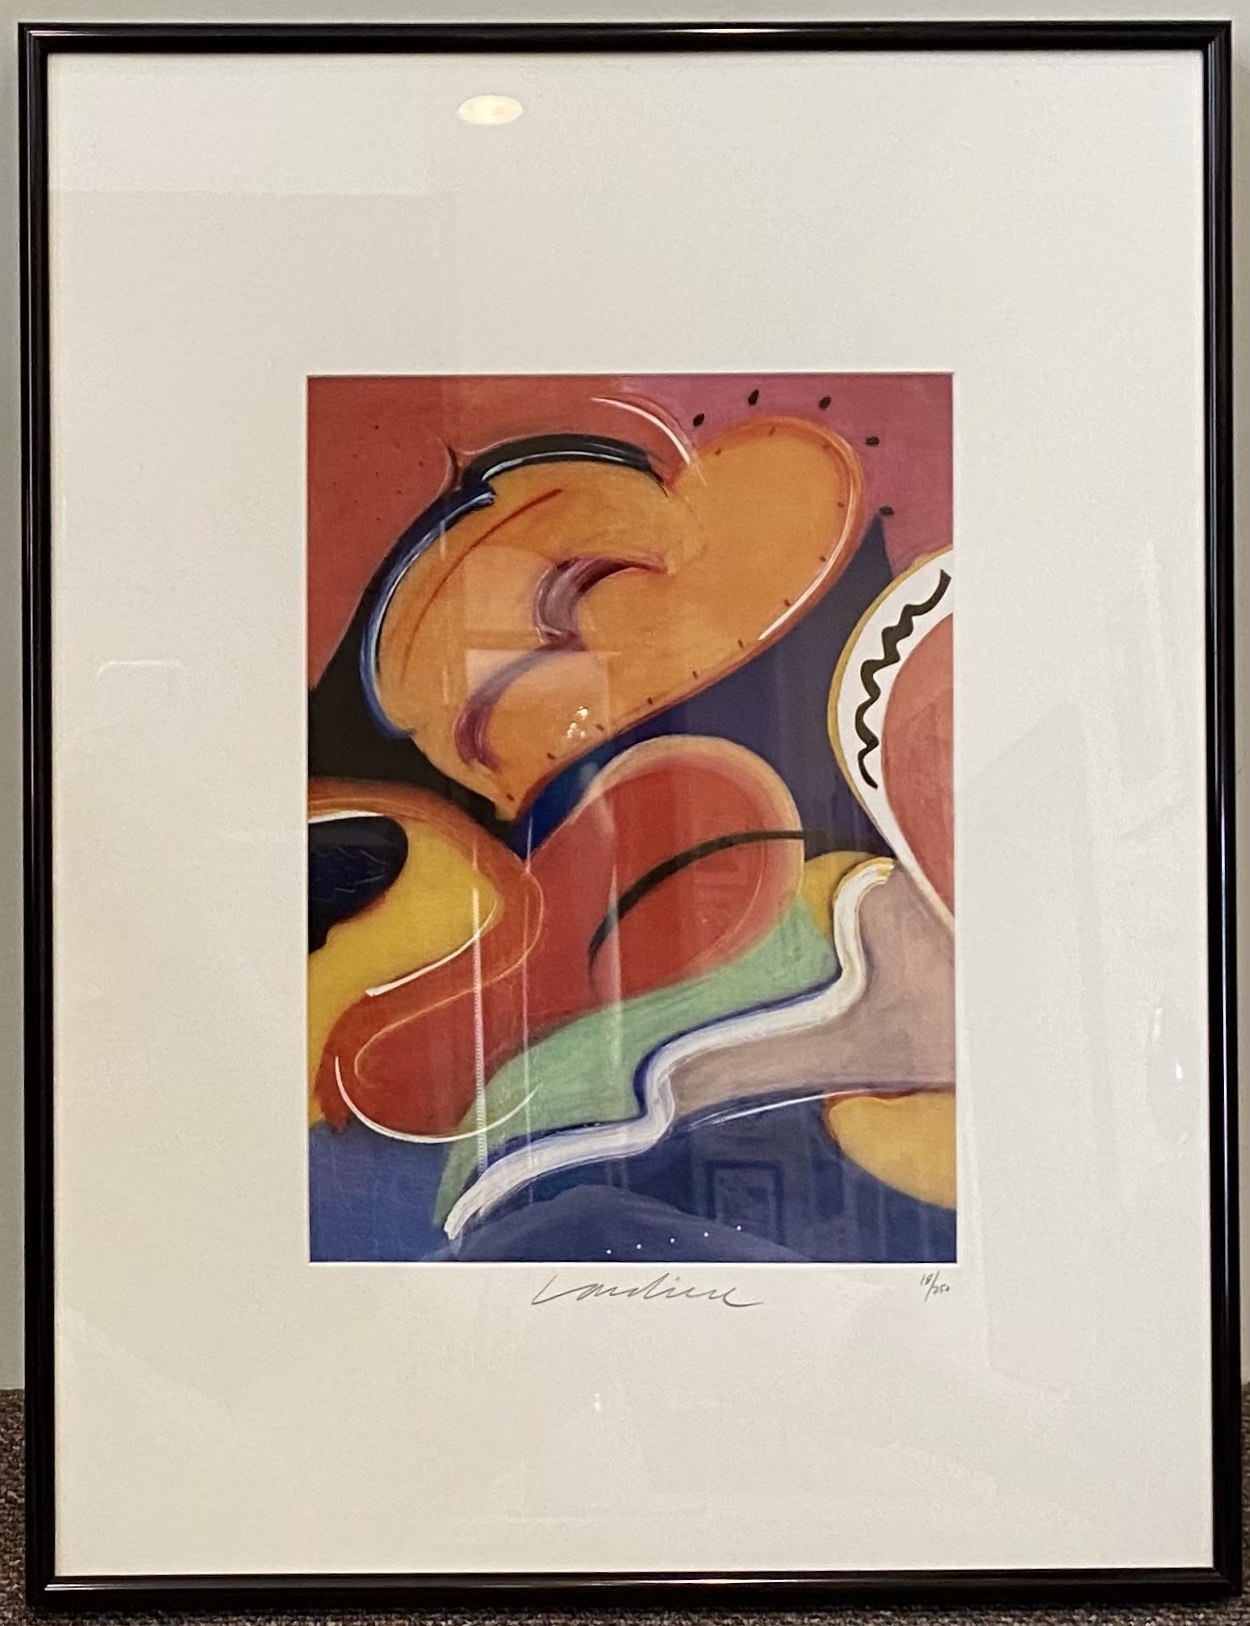 Geoffrey Lardiere
Sea of Dreams
Lithograph
11” X 15”
$365.
